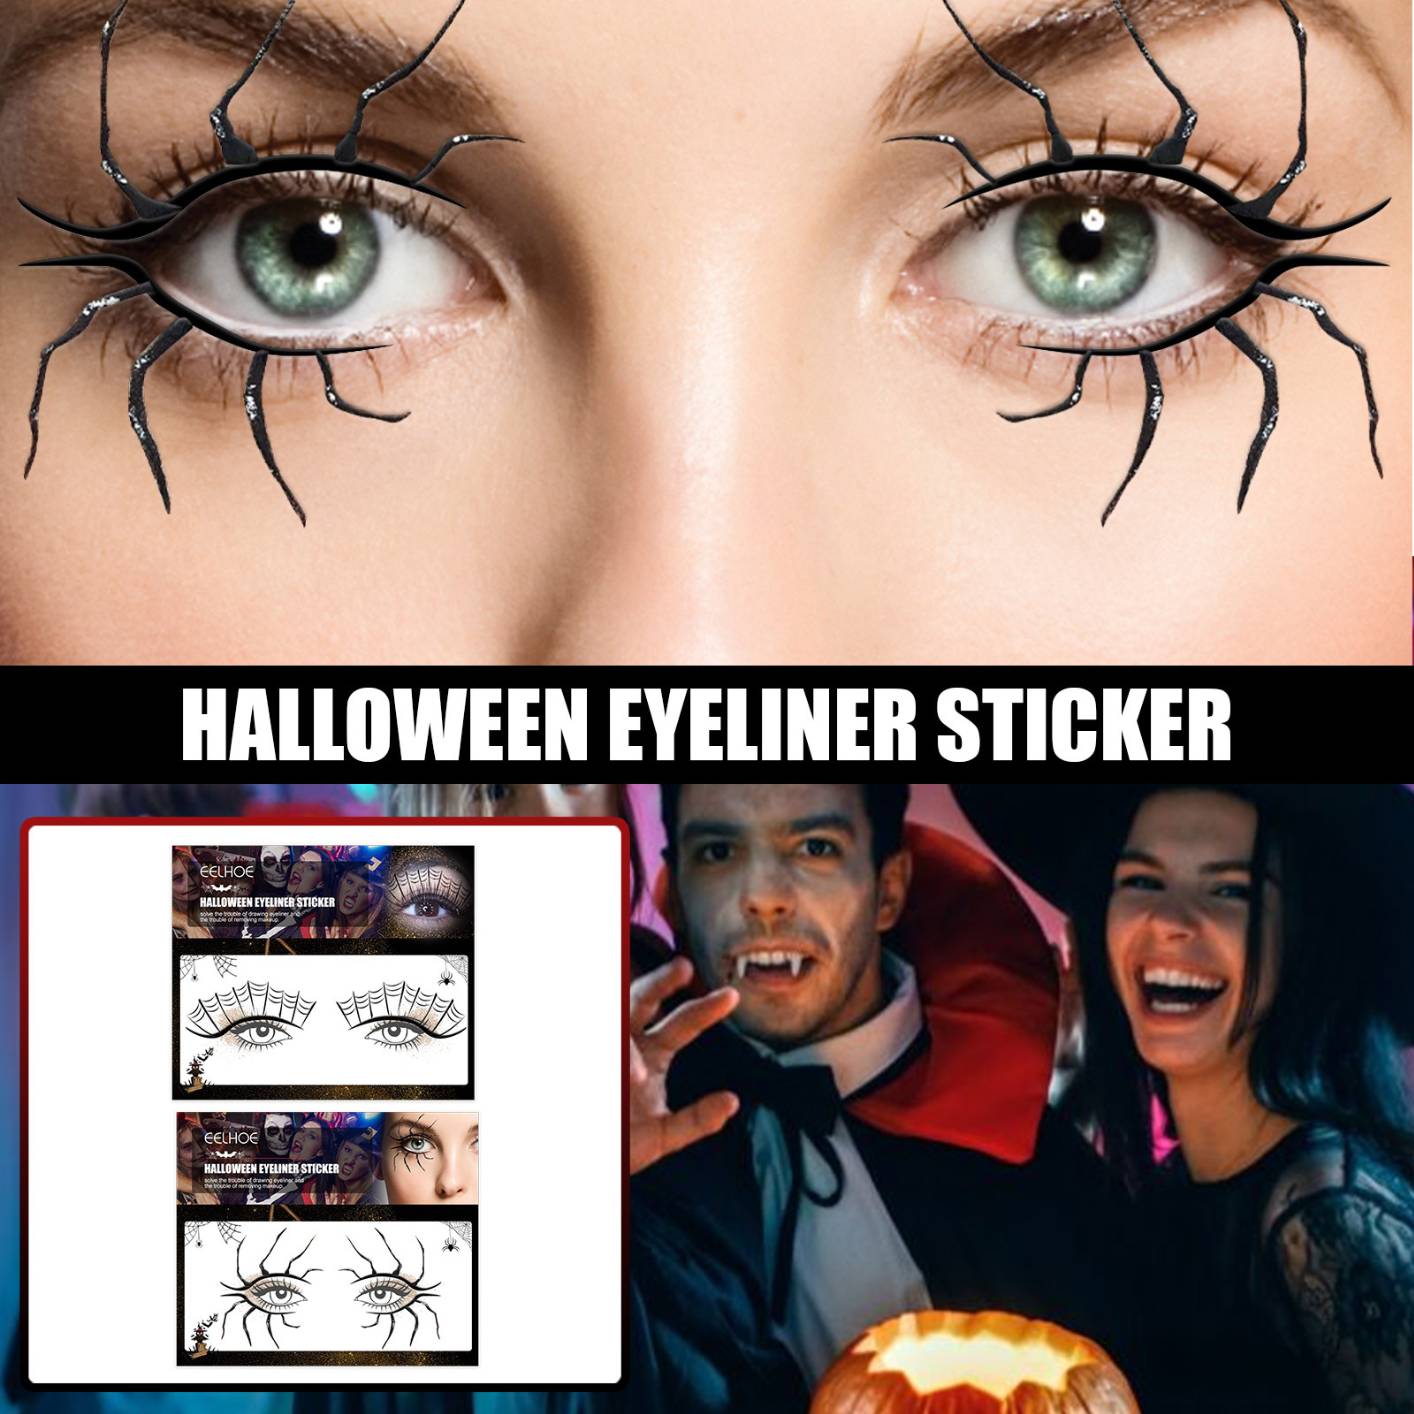 Halloween Eye Shadow Stickers,Halloween Eyeliner Sticker Eye Temporary Tattoos Bat Spider Web Pattern Eye Makeup Self-Adhesive Face Tattoos for Party, Rave Festival